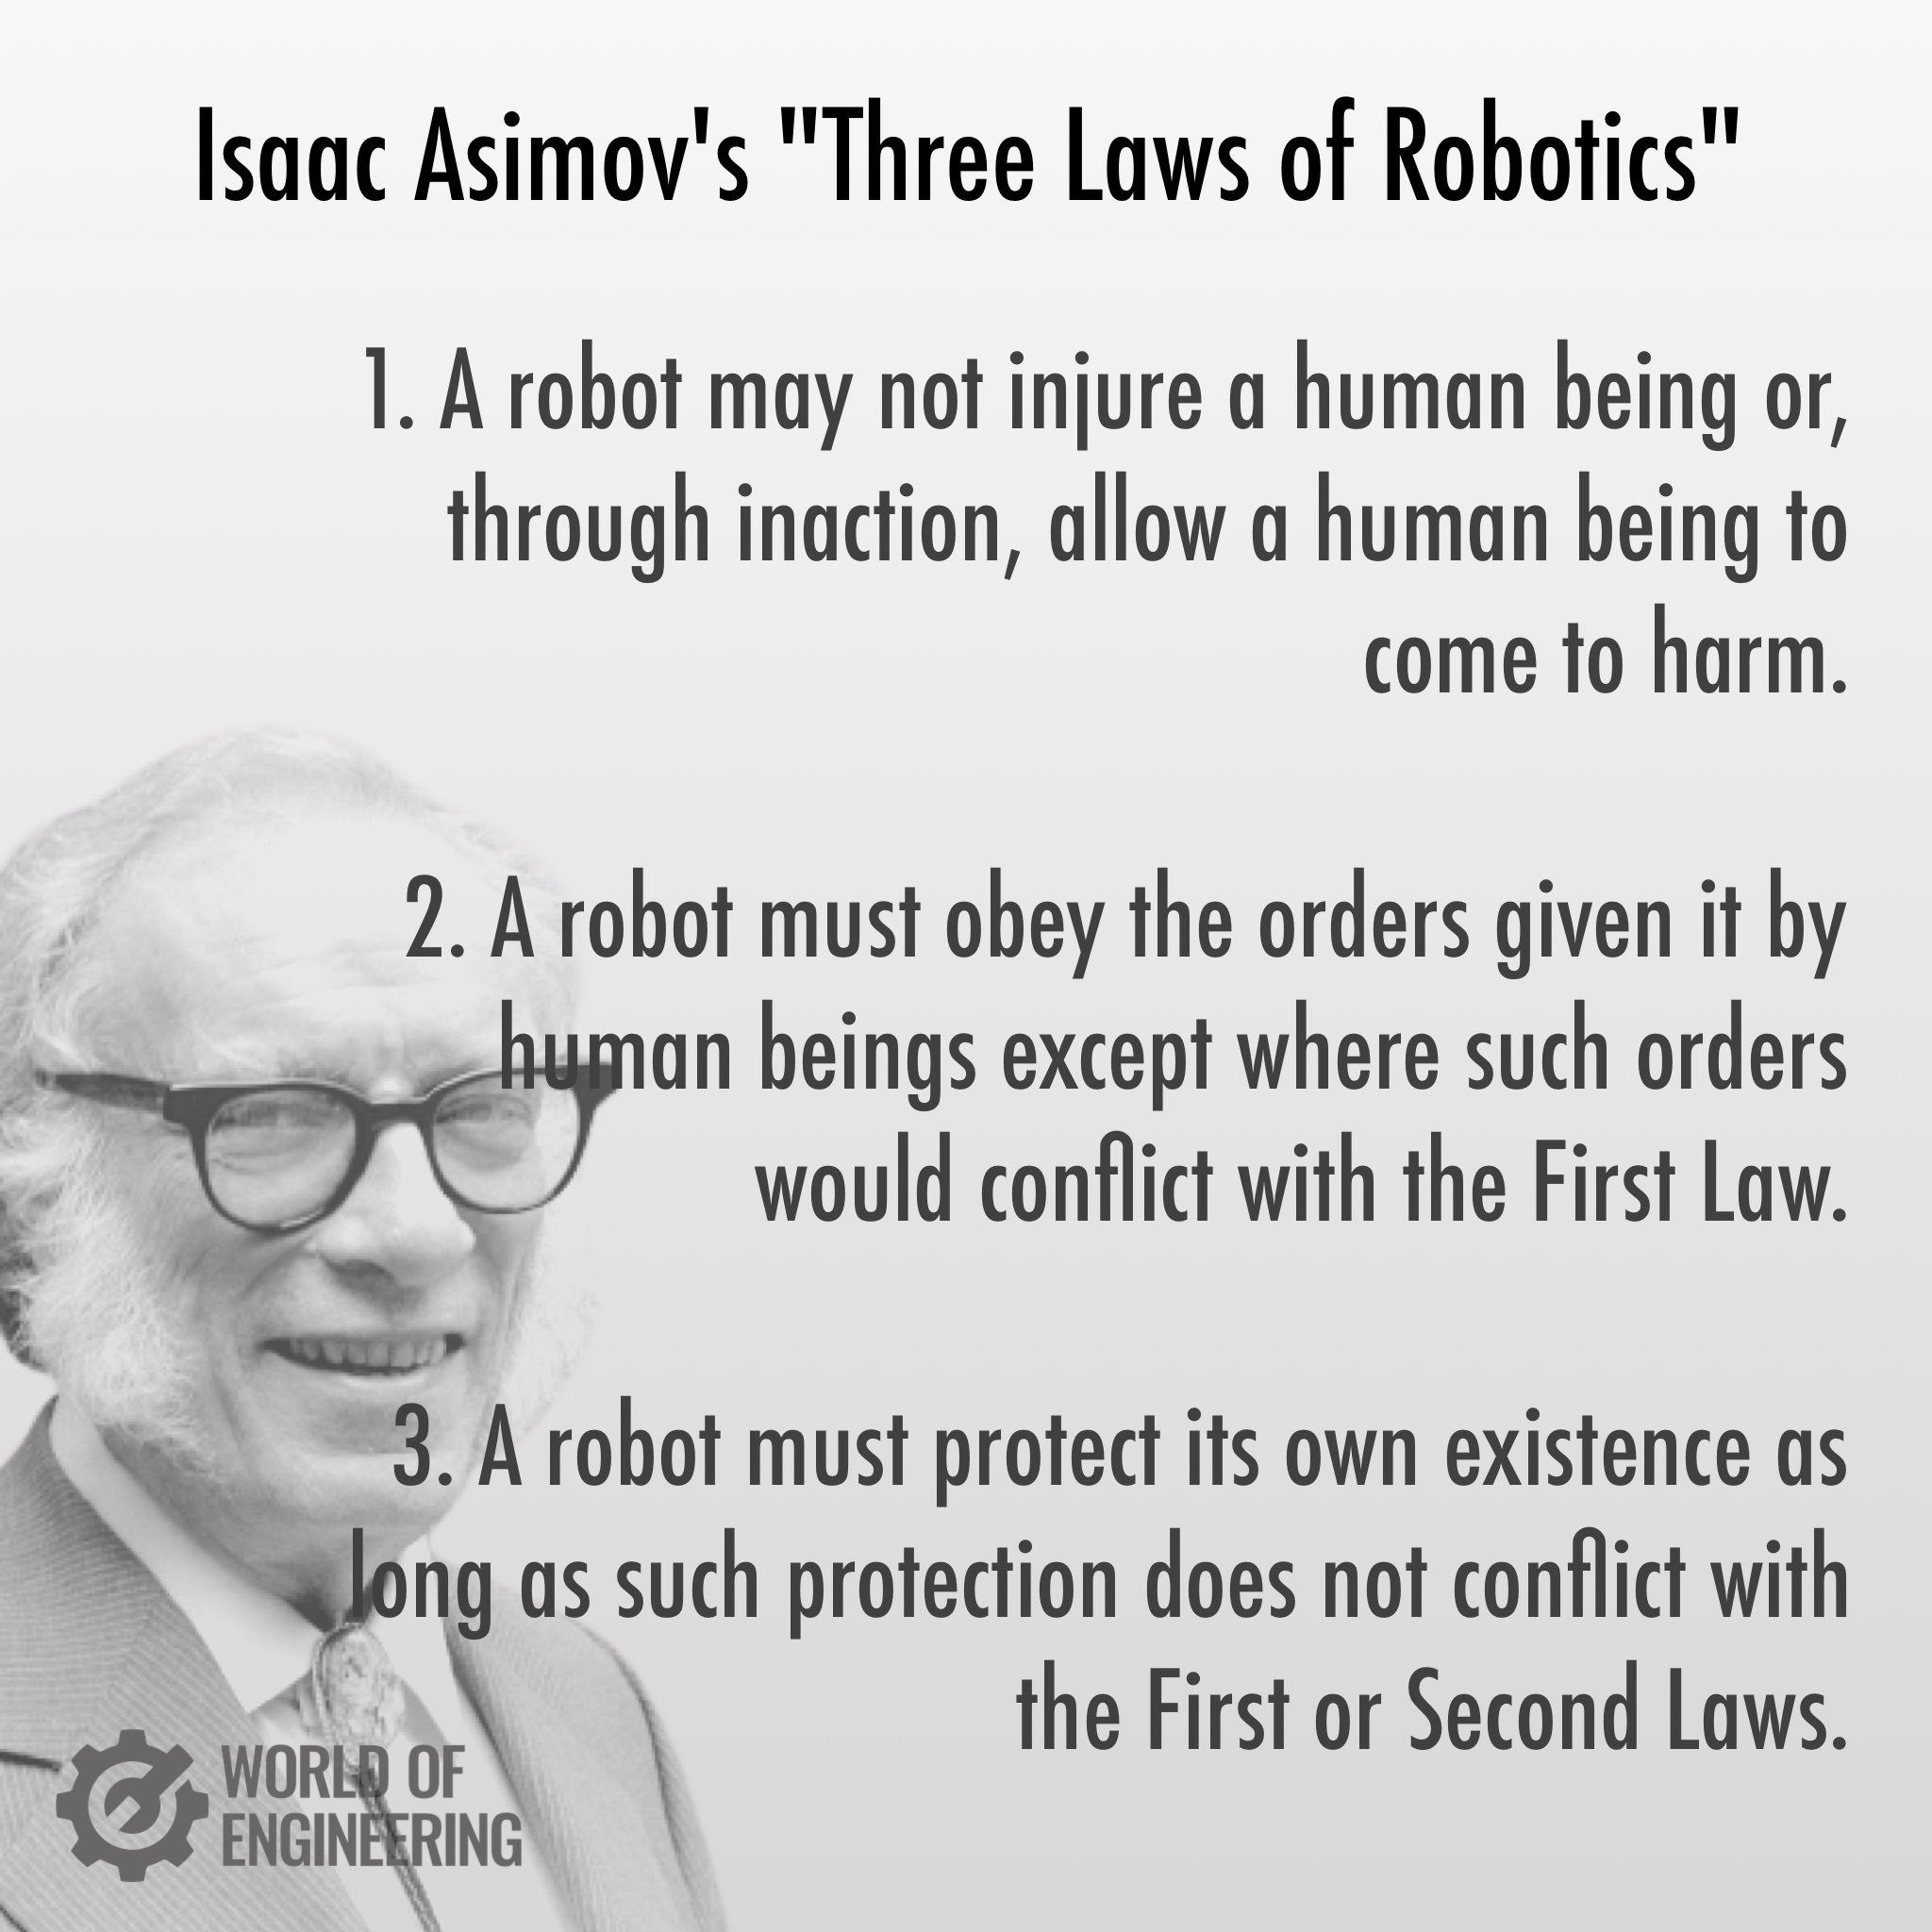 World of Engineering on Twitter: "Isaac Asimov's “Three laws of robotics “  https://t.co/yXBtXRxvfx" / Twitter